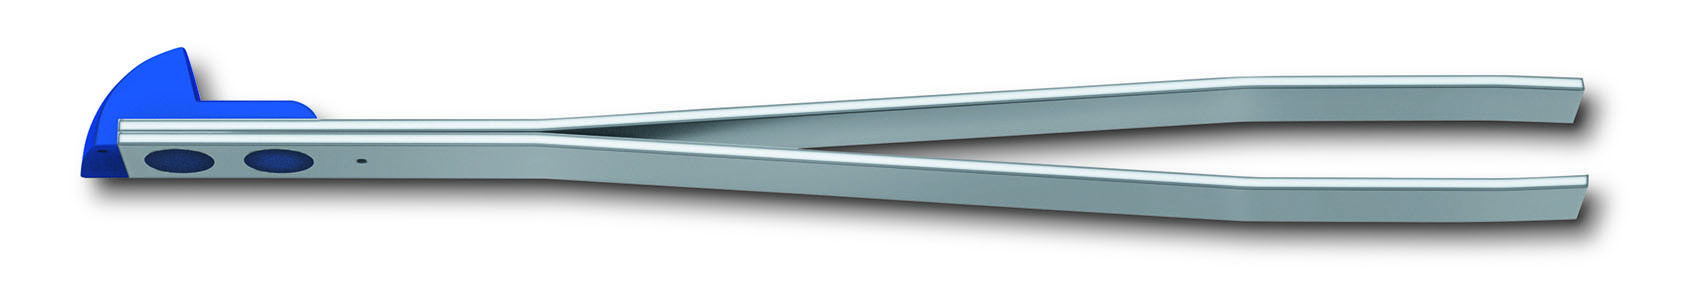 Пинцет для ножей Victorinox (A.3642.2.10) серебристый/синий